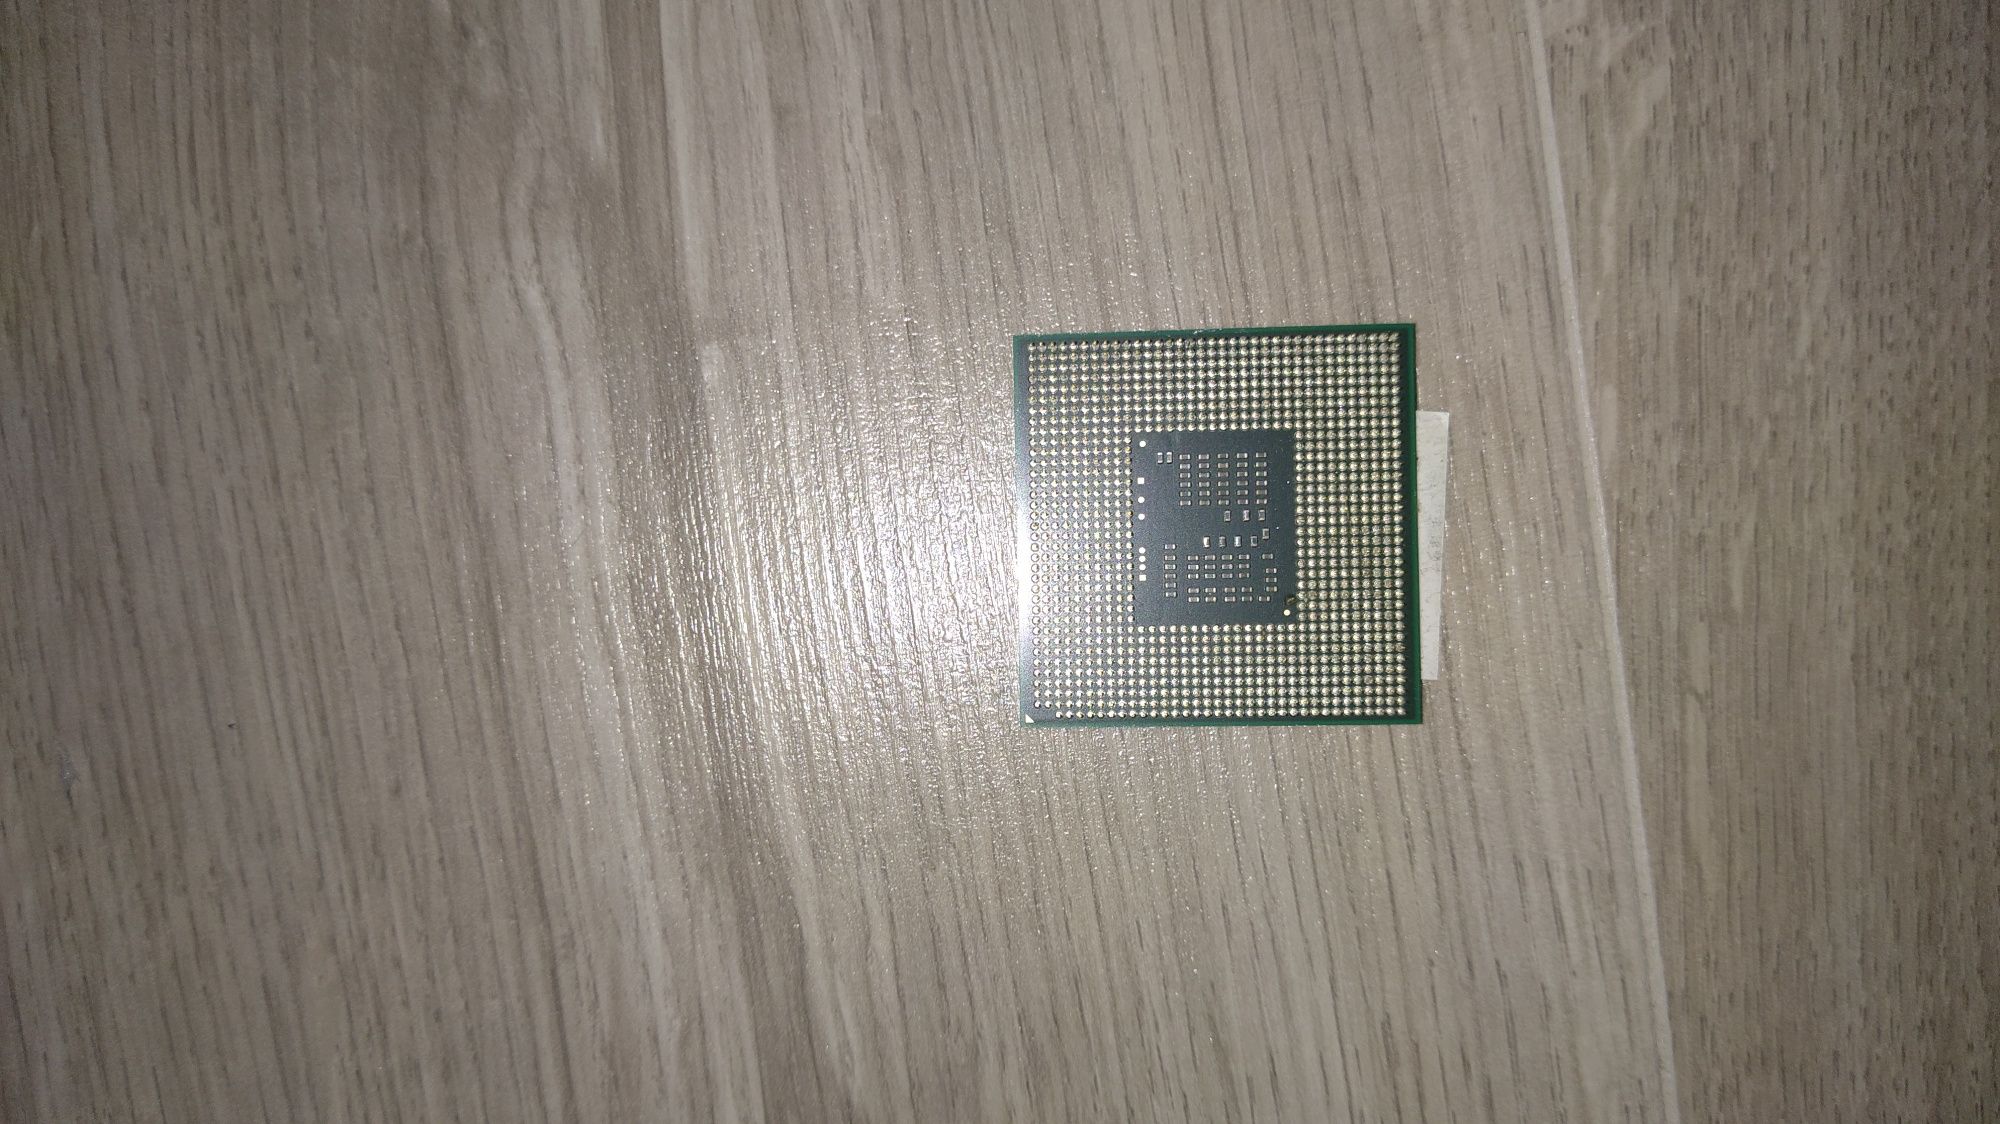 Procesor intel  i3-380m 2.53 ghz